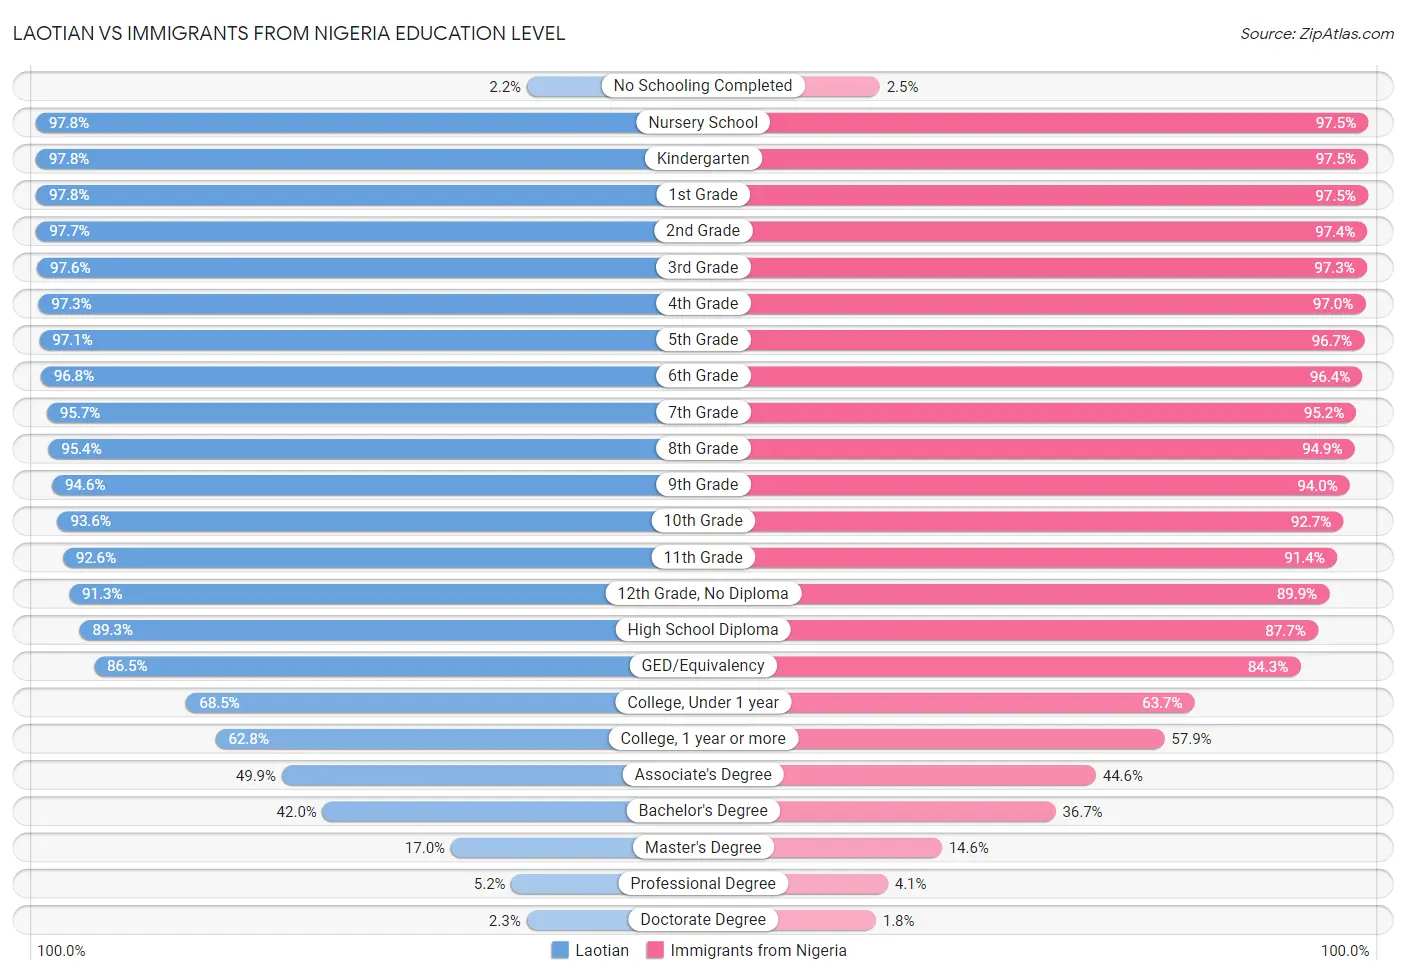 Laotian vs Immigrants from Nigeria Education Level